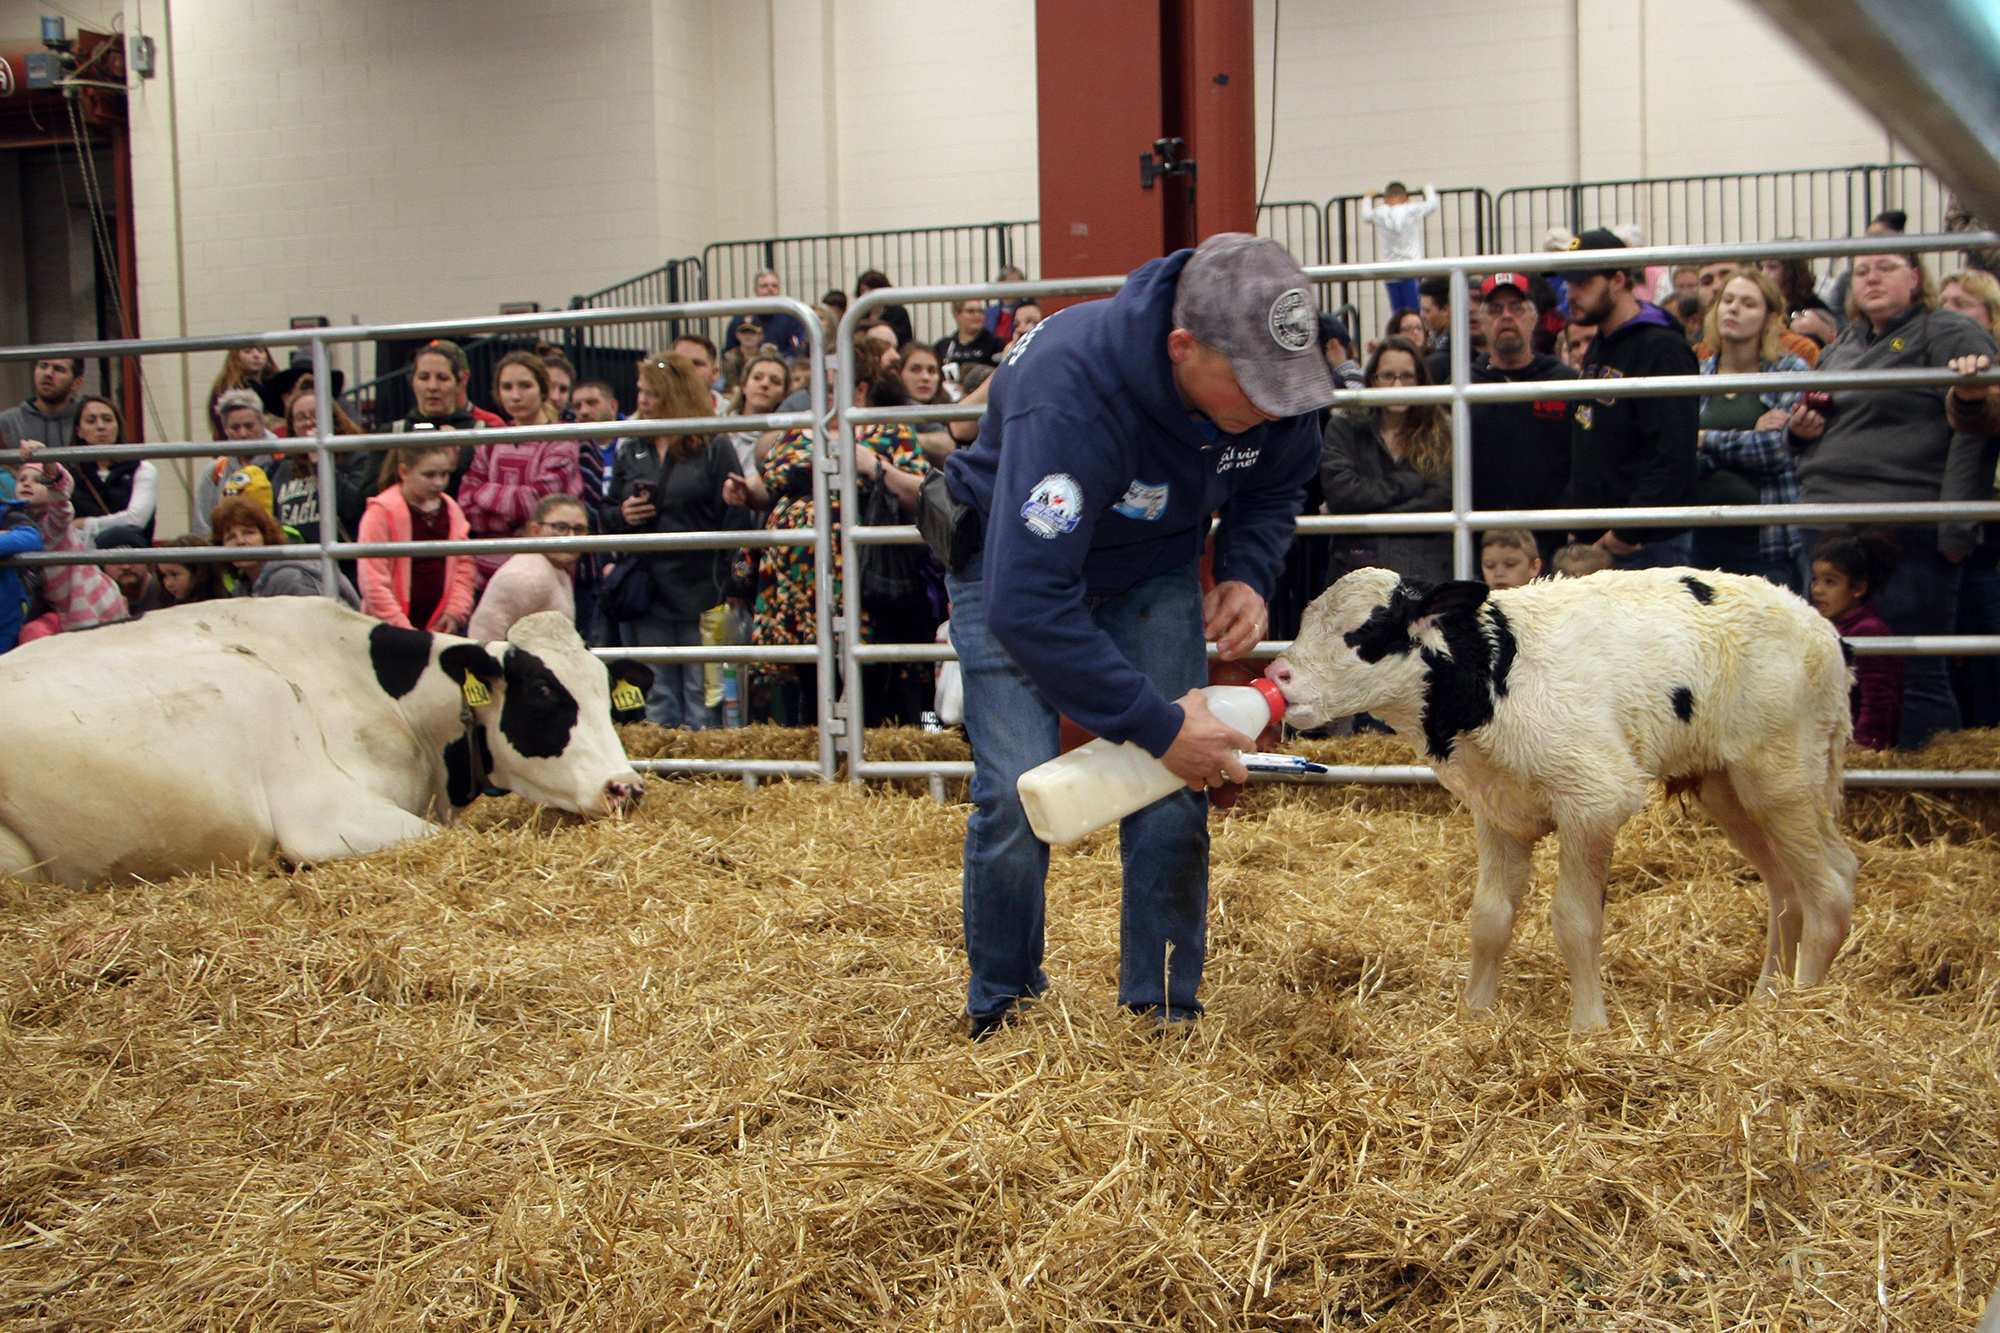 farm show feeding milk to new calf